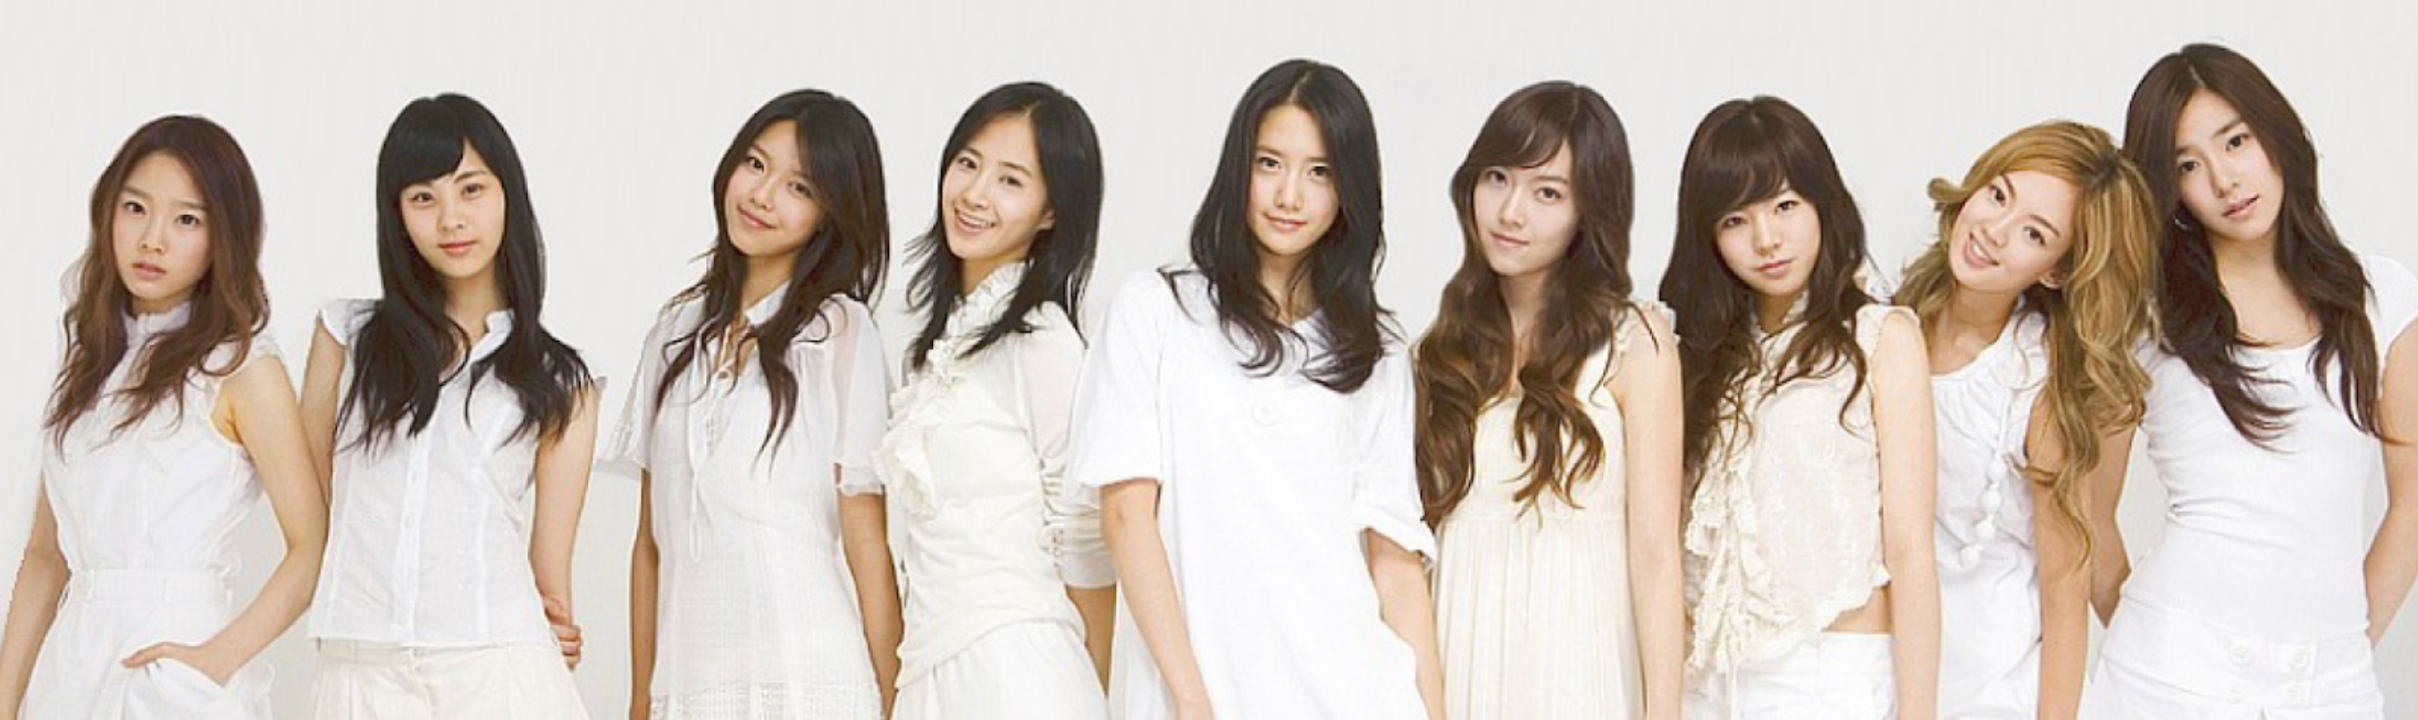 SM Entertainment Girlgroup Girls' Generation: first single 